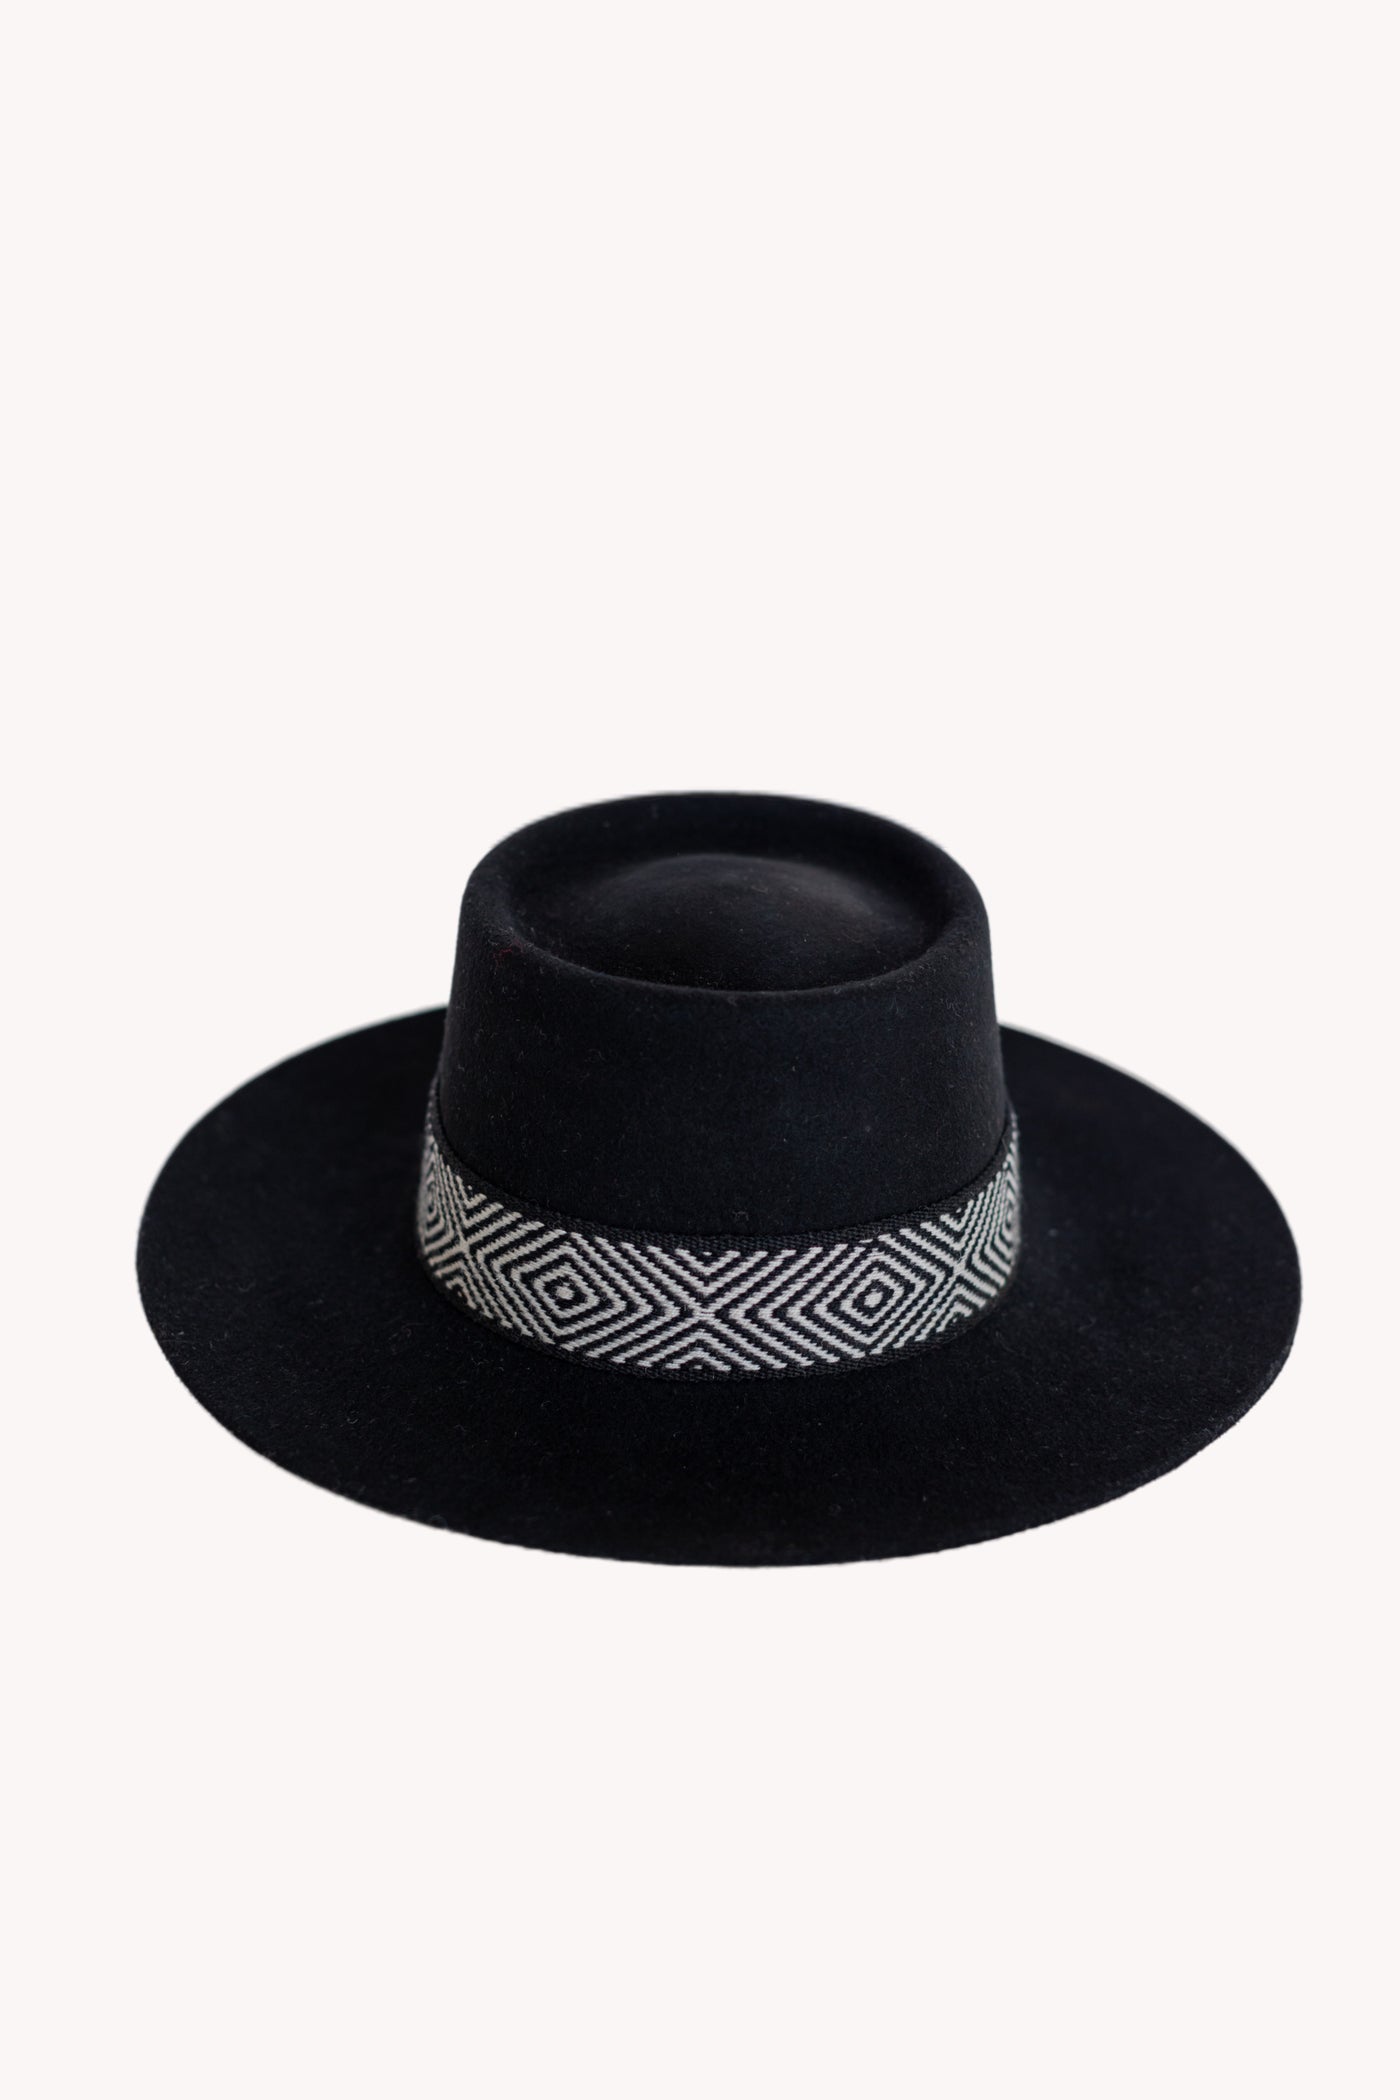 Black Bucket style alpaca wool hat